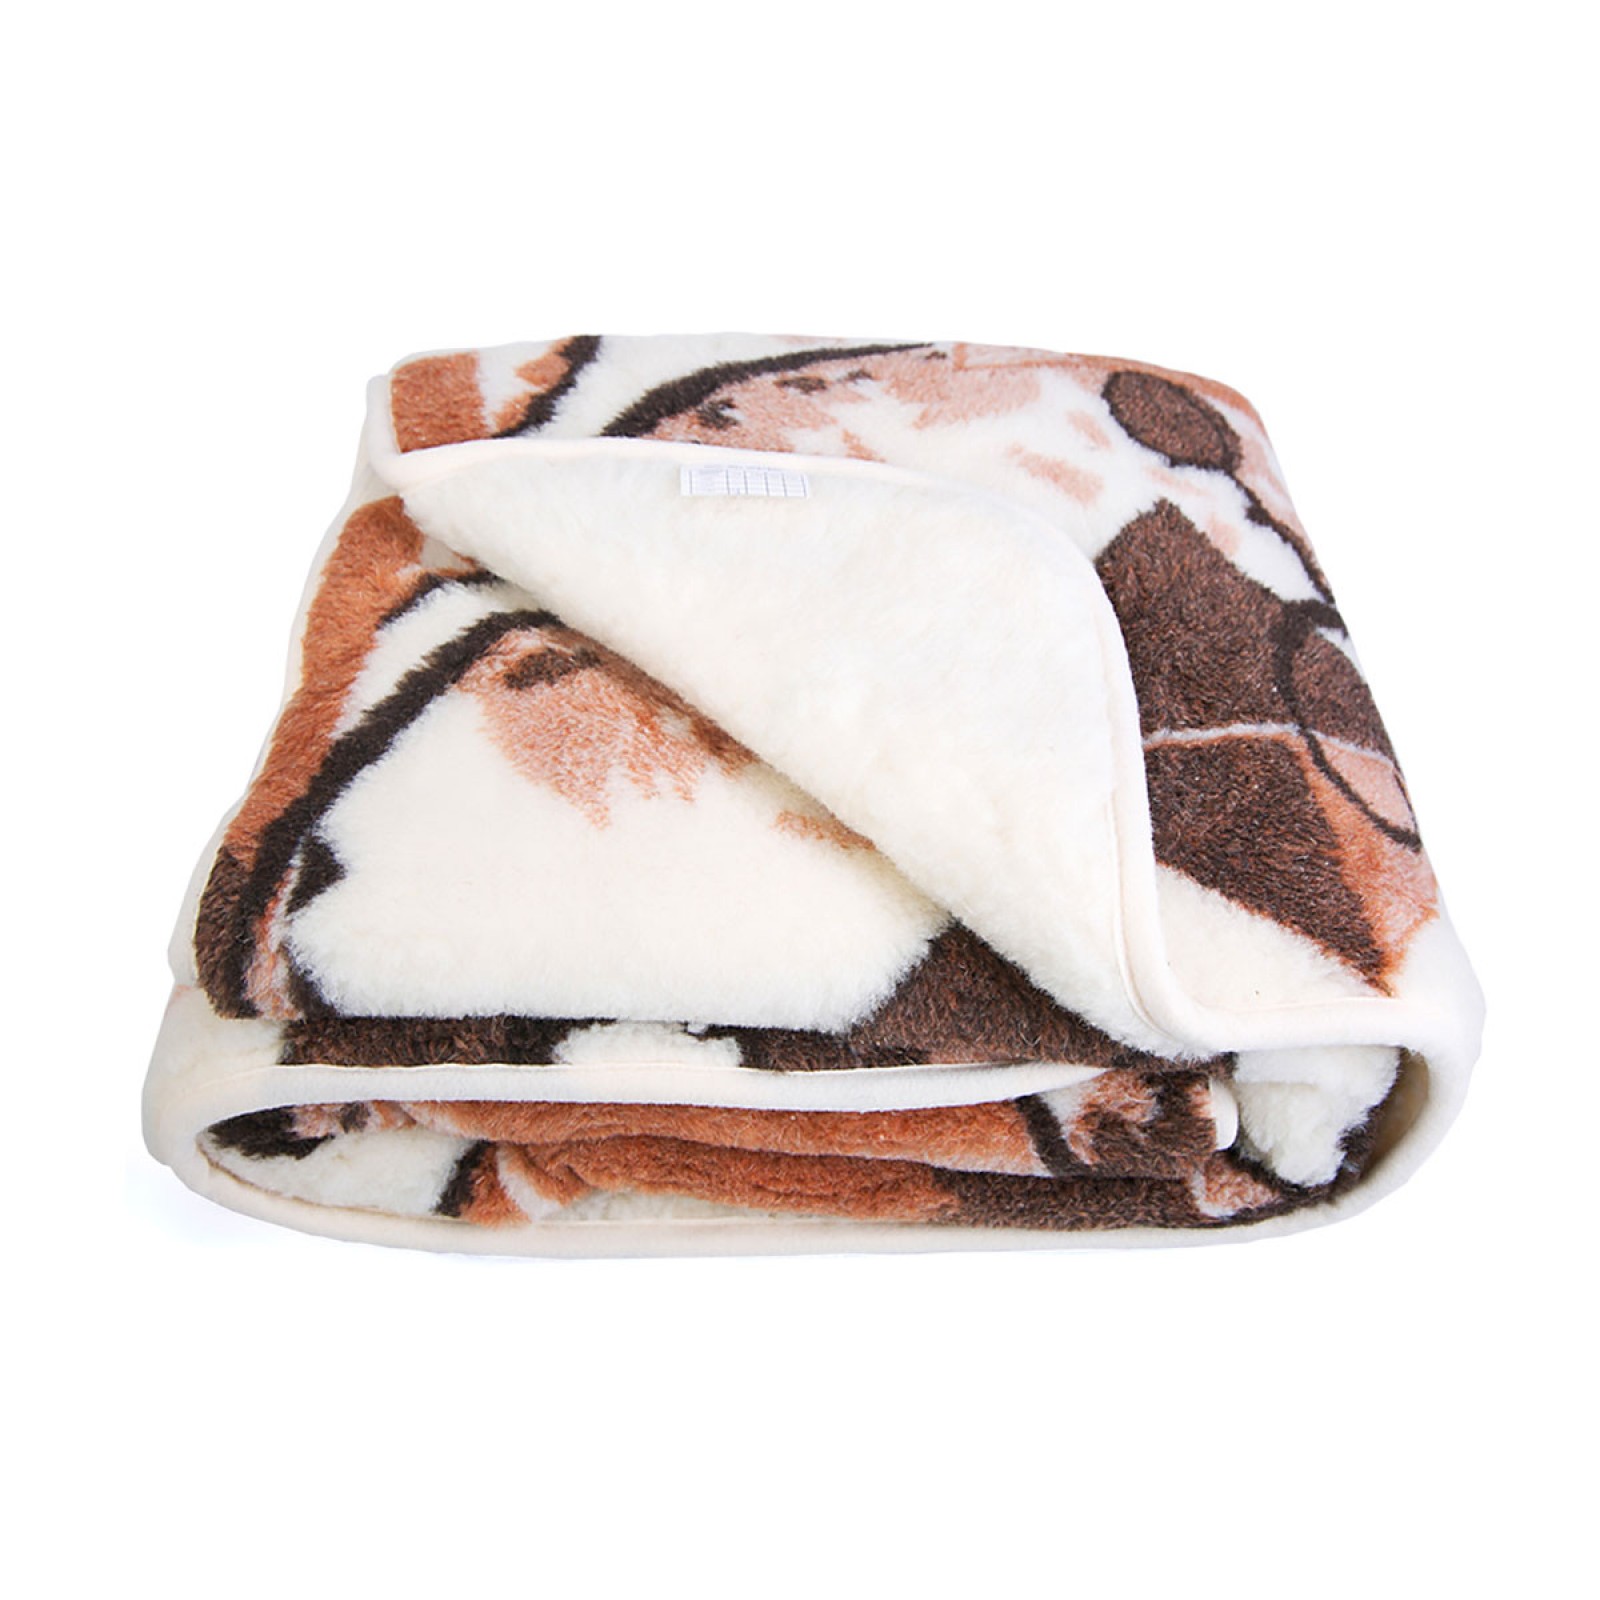 Одеяло из овечьей шерсти 145x200 с коричневым рисунком